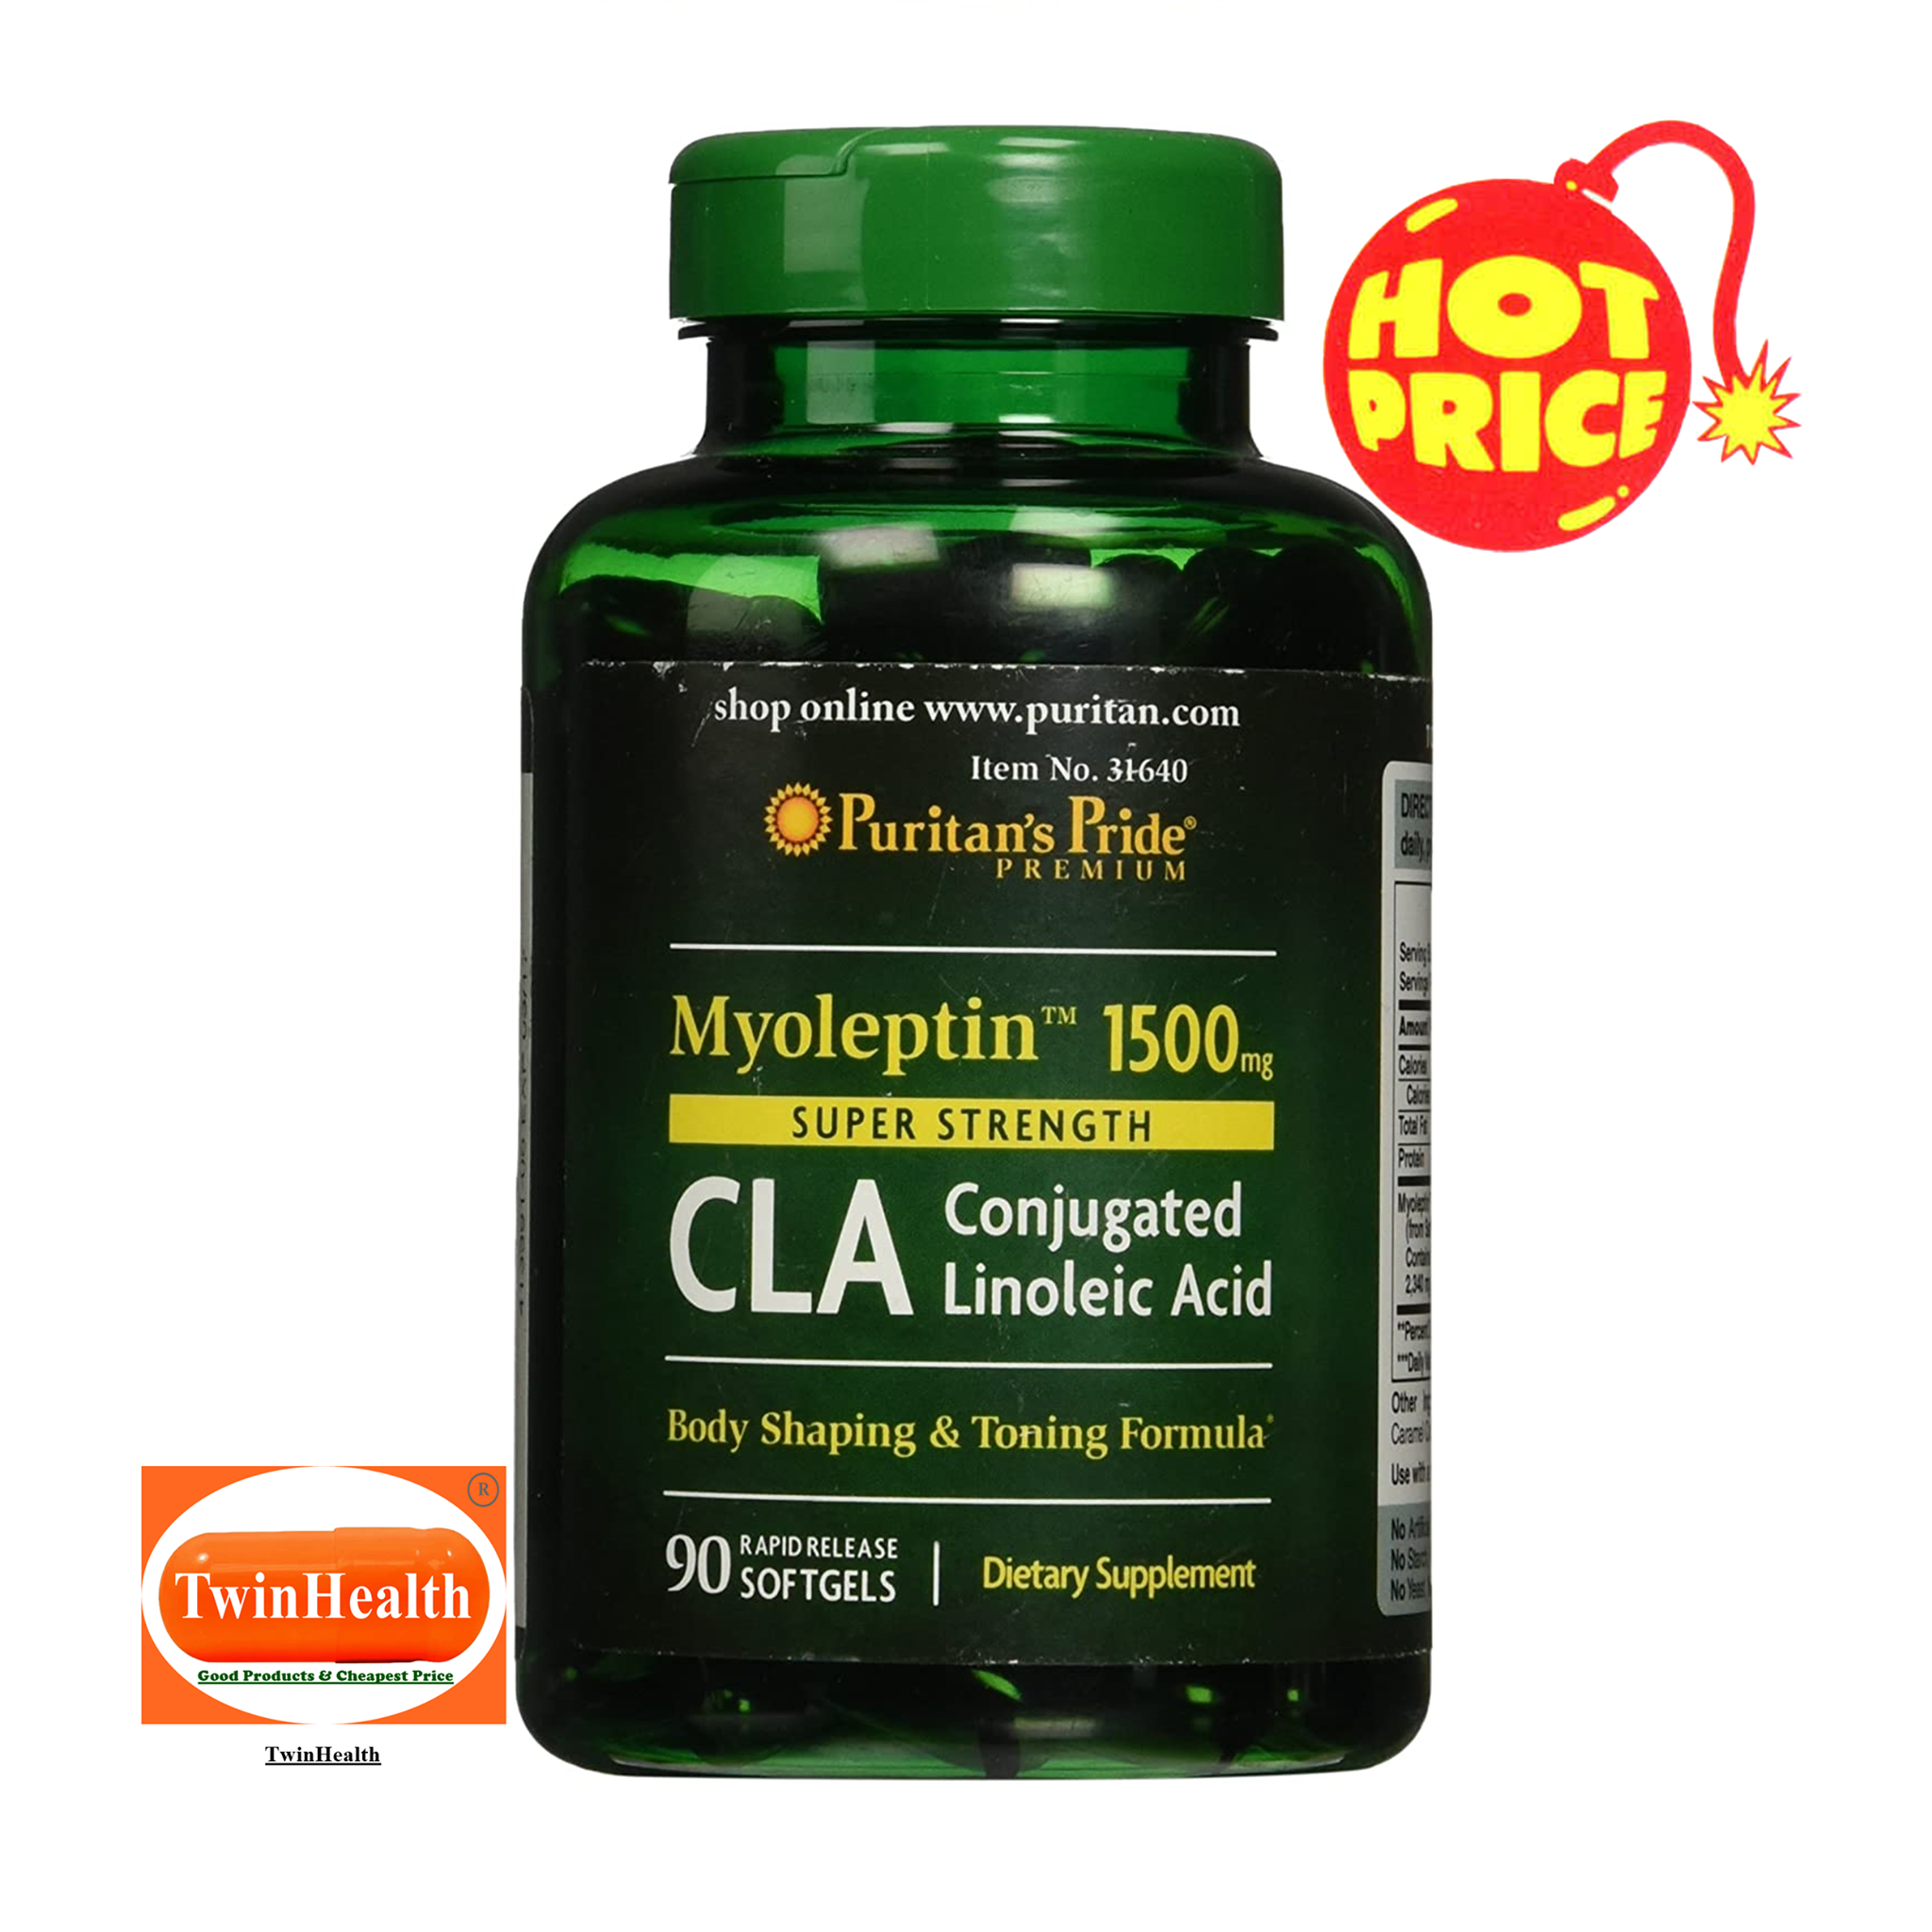 Puritan's Pride Super Strength Myo-Leptin CLA 1500 mg / 90 Softgels